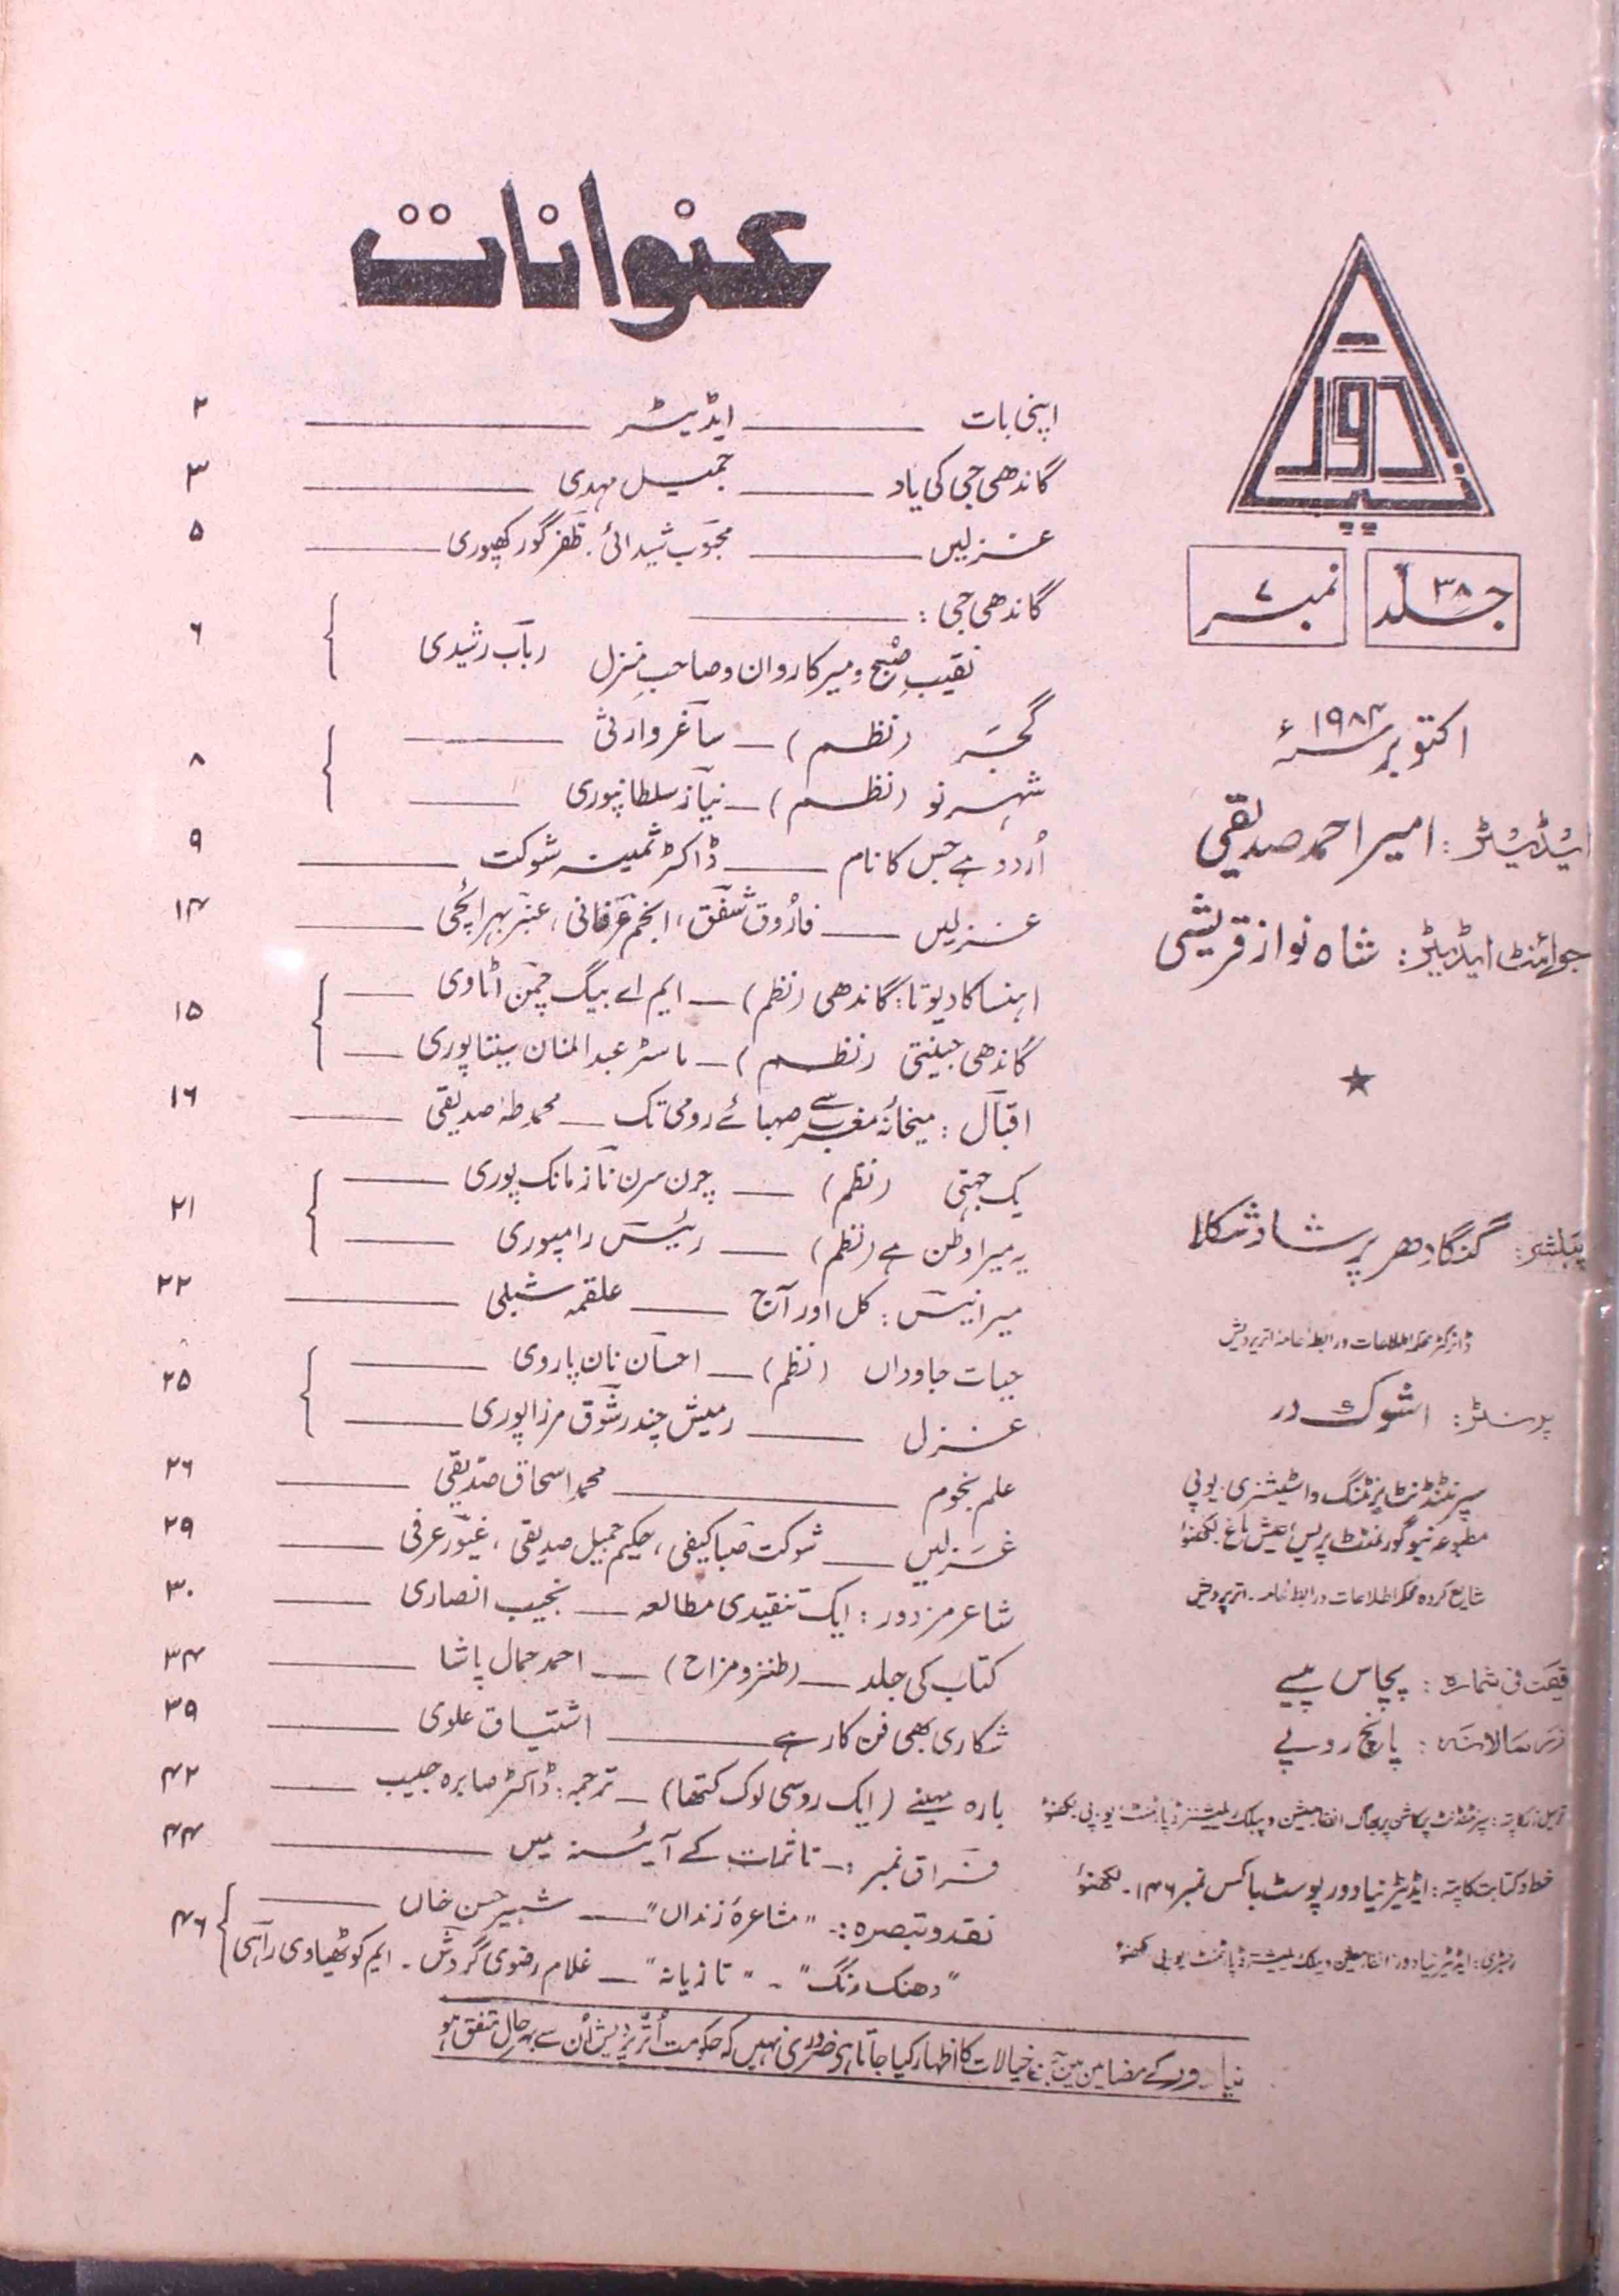 Naya Daor Jild 38 No 7 Oct 1984 MANUU